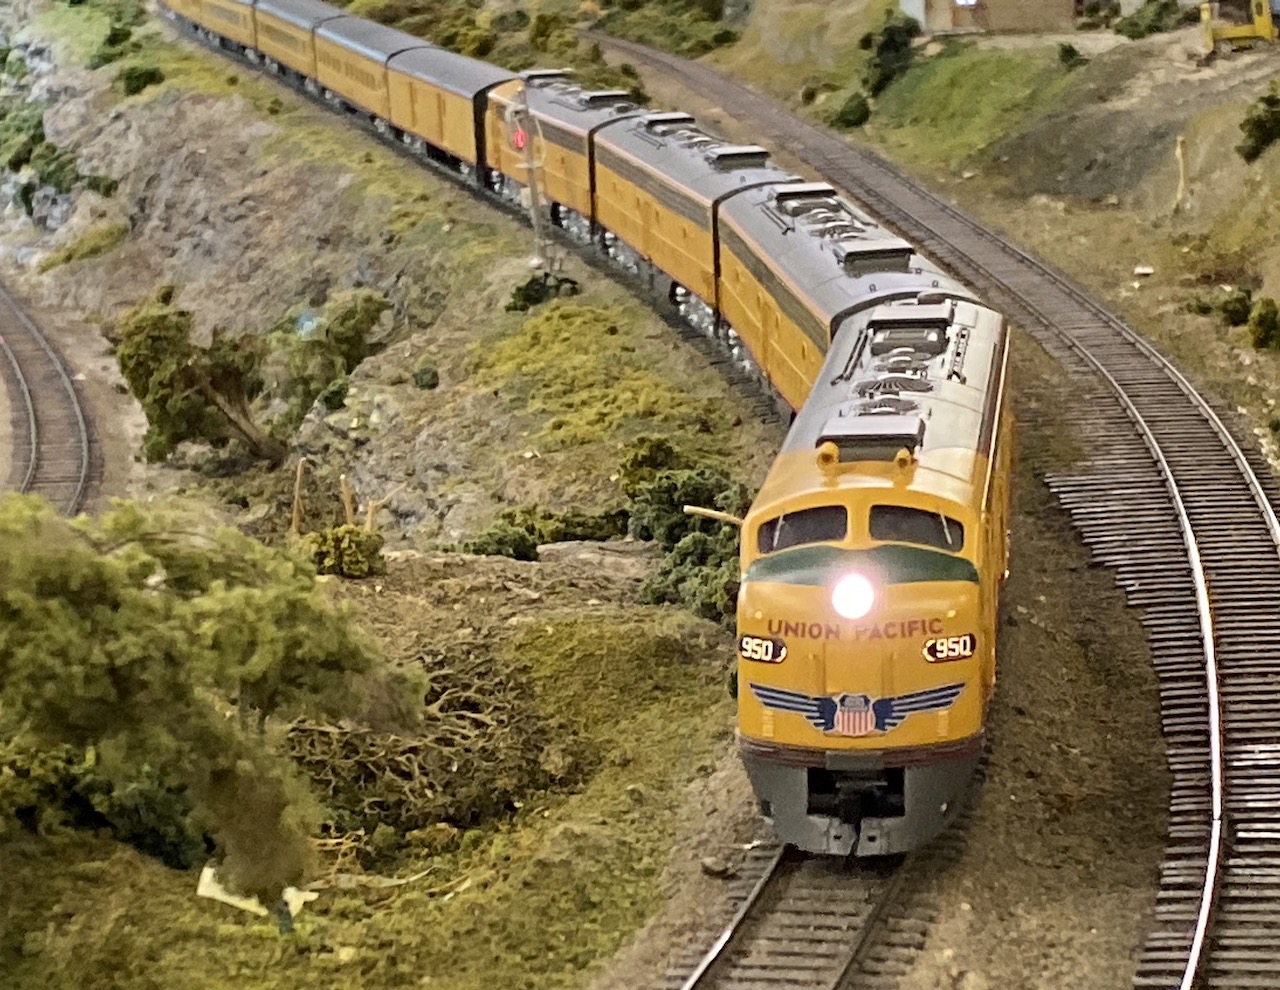 Union Pacific passenger train heads down hill